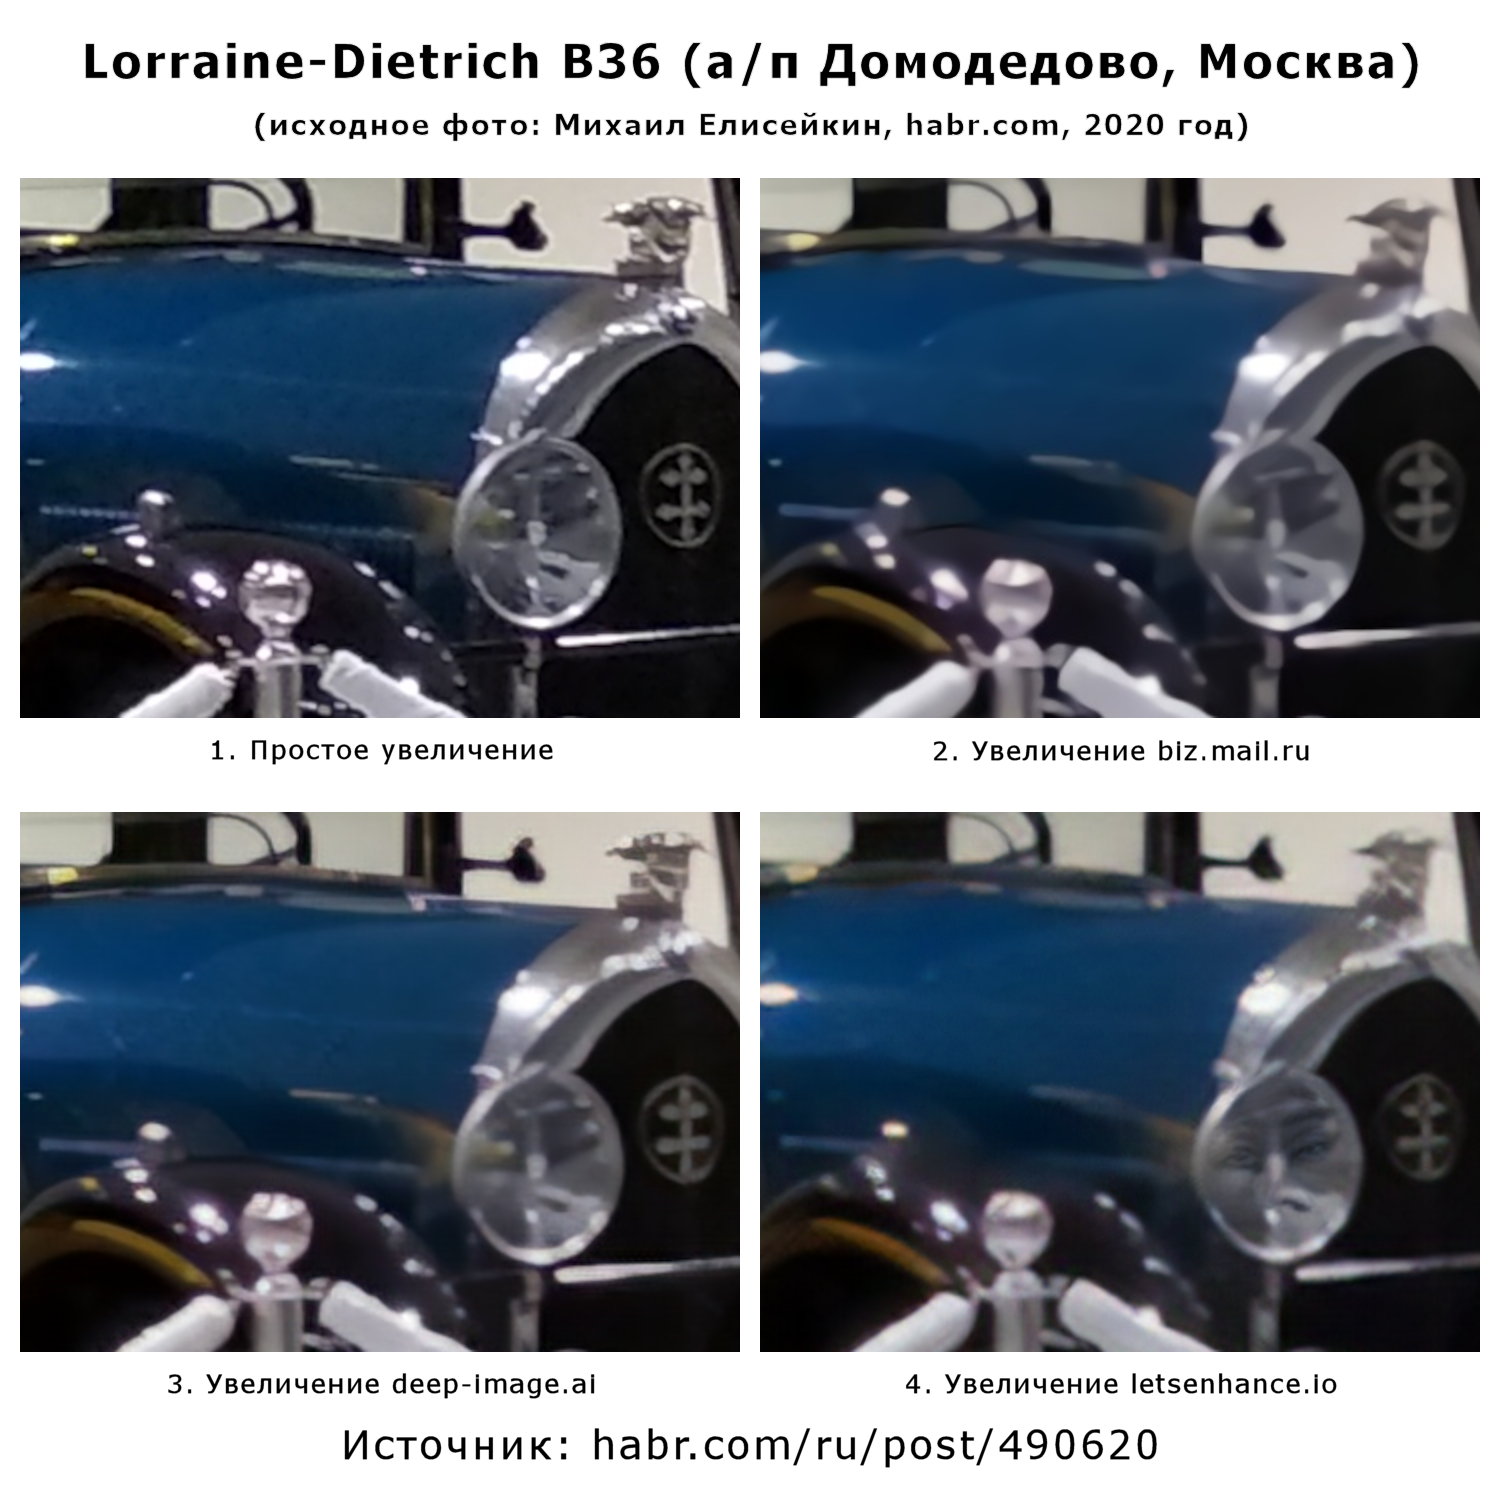 Капот Lorraine-Dietrich B36